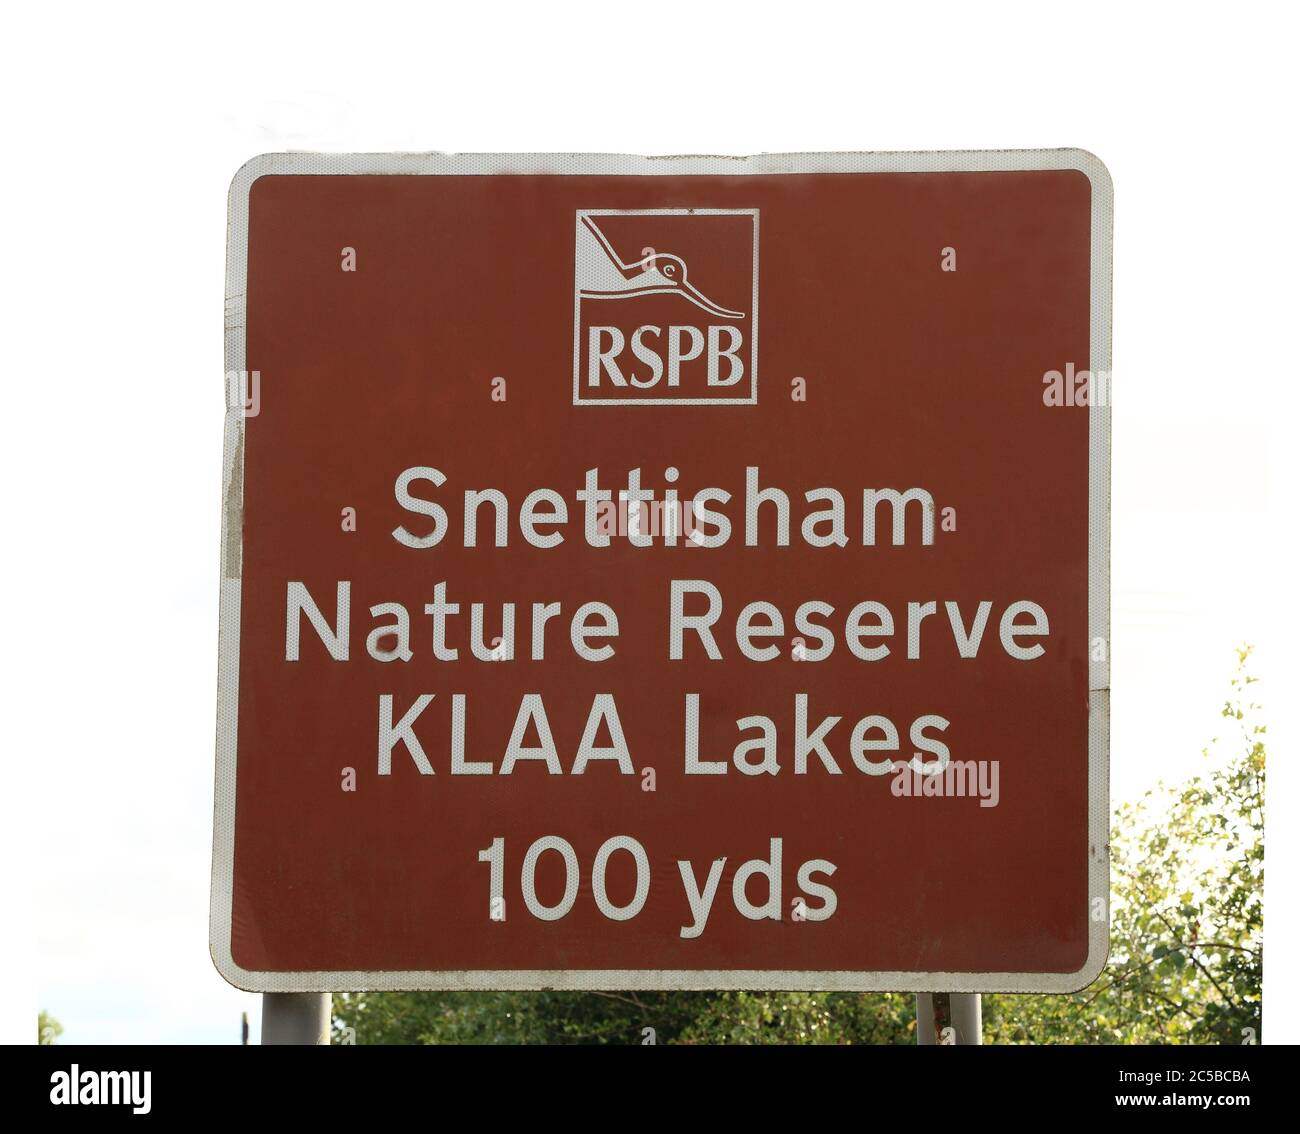 RSPB, Nature Reserve, Snettisham, sign, Norfolk, England, UK Stock Photo